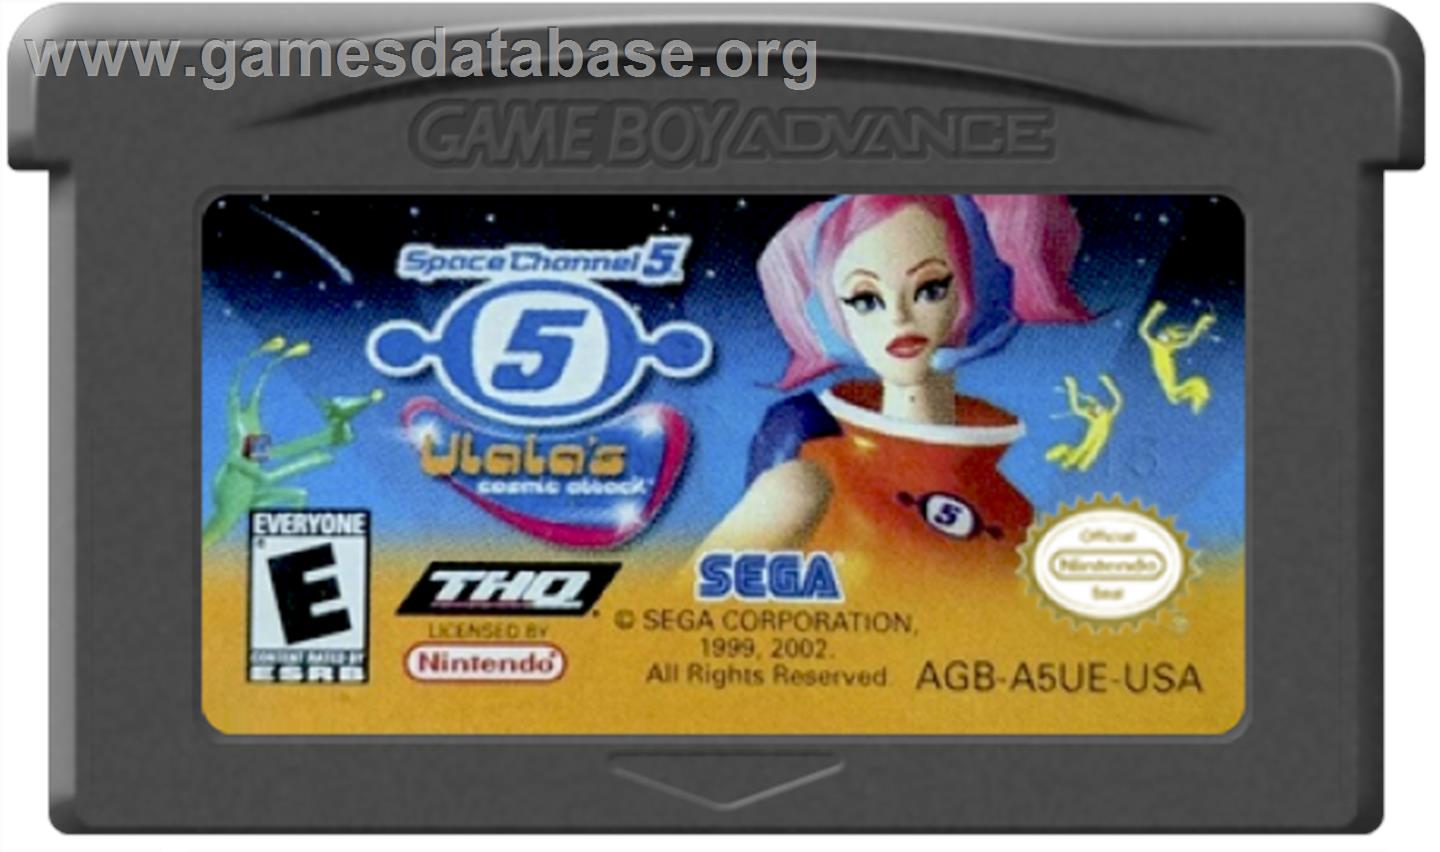 Space Channel 5: Ulala's Cosmic Attack - Nintendo Game Boy Advance - Artwork - Cartridge